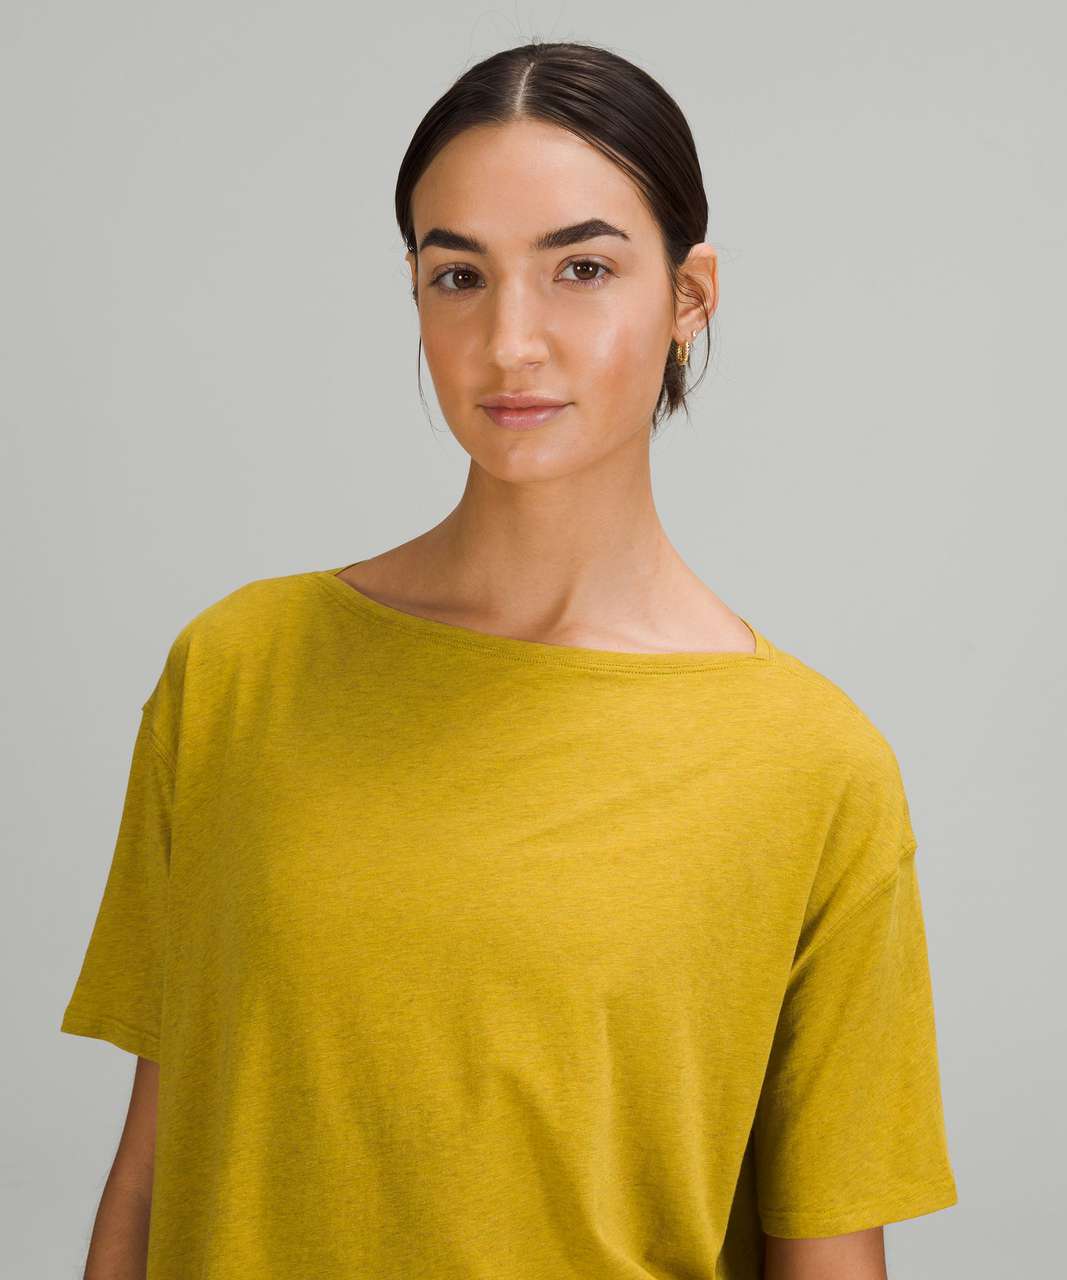 Lululemon Back in Action Short Sleeve Shirt - Heathered Auric Gold